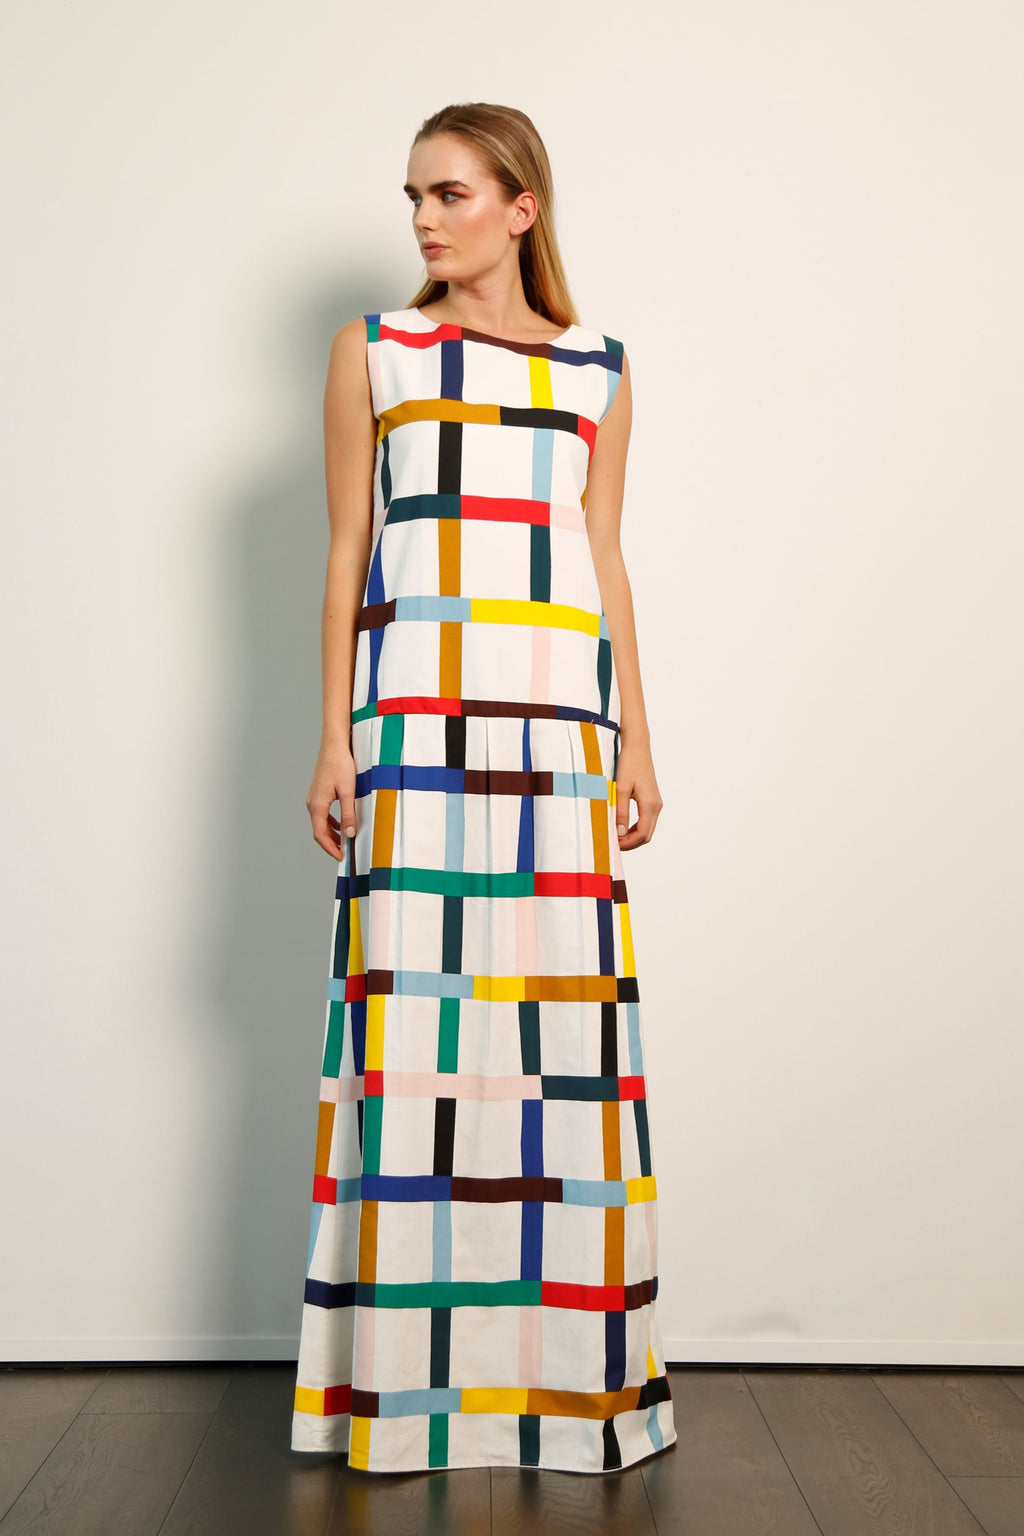 Mondrian Style Print Dress